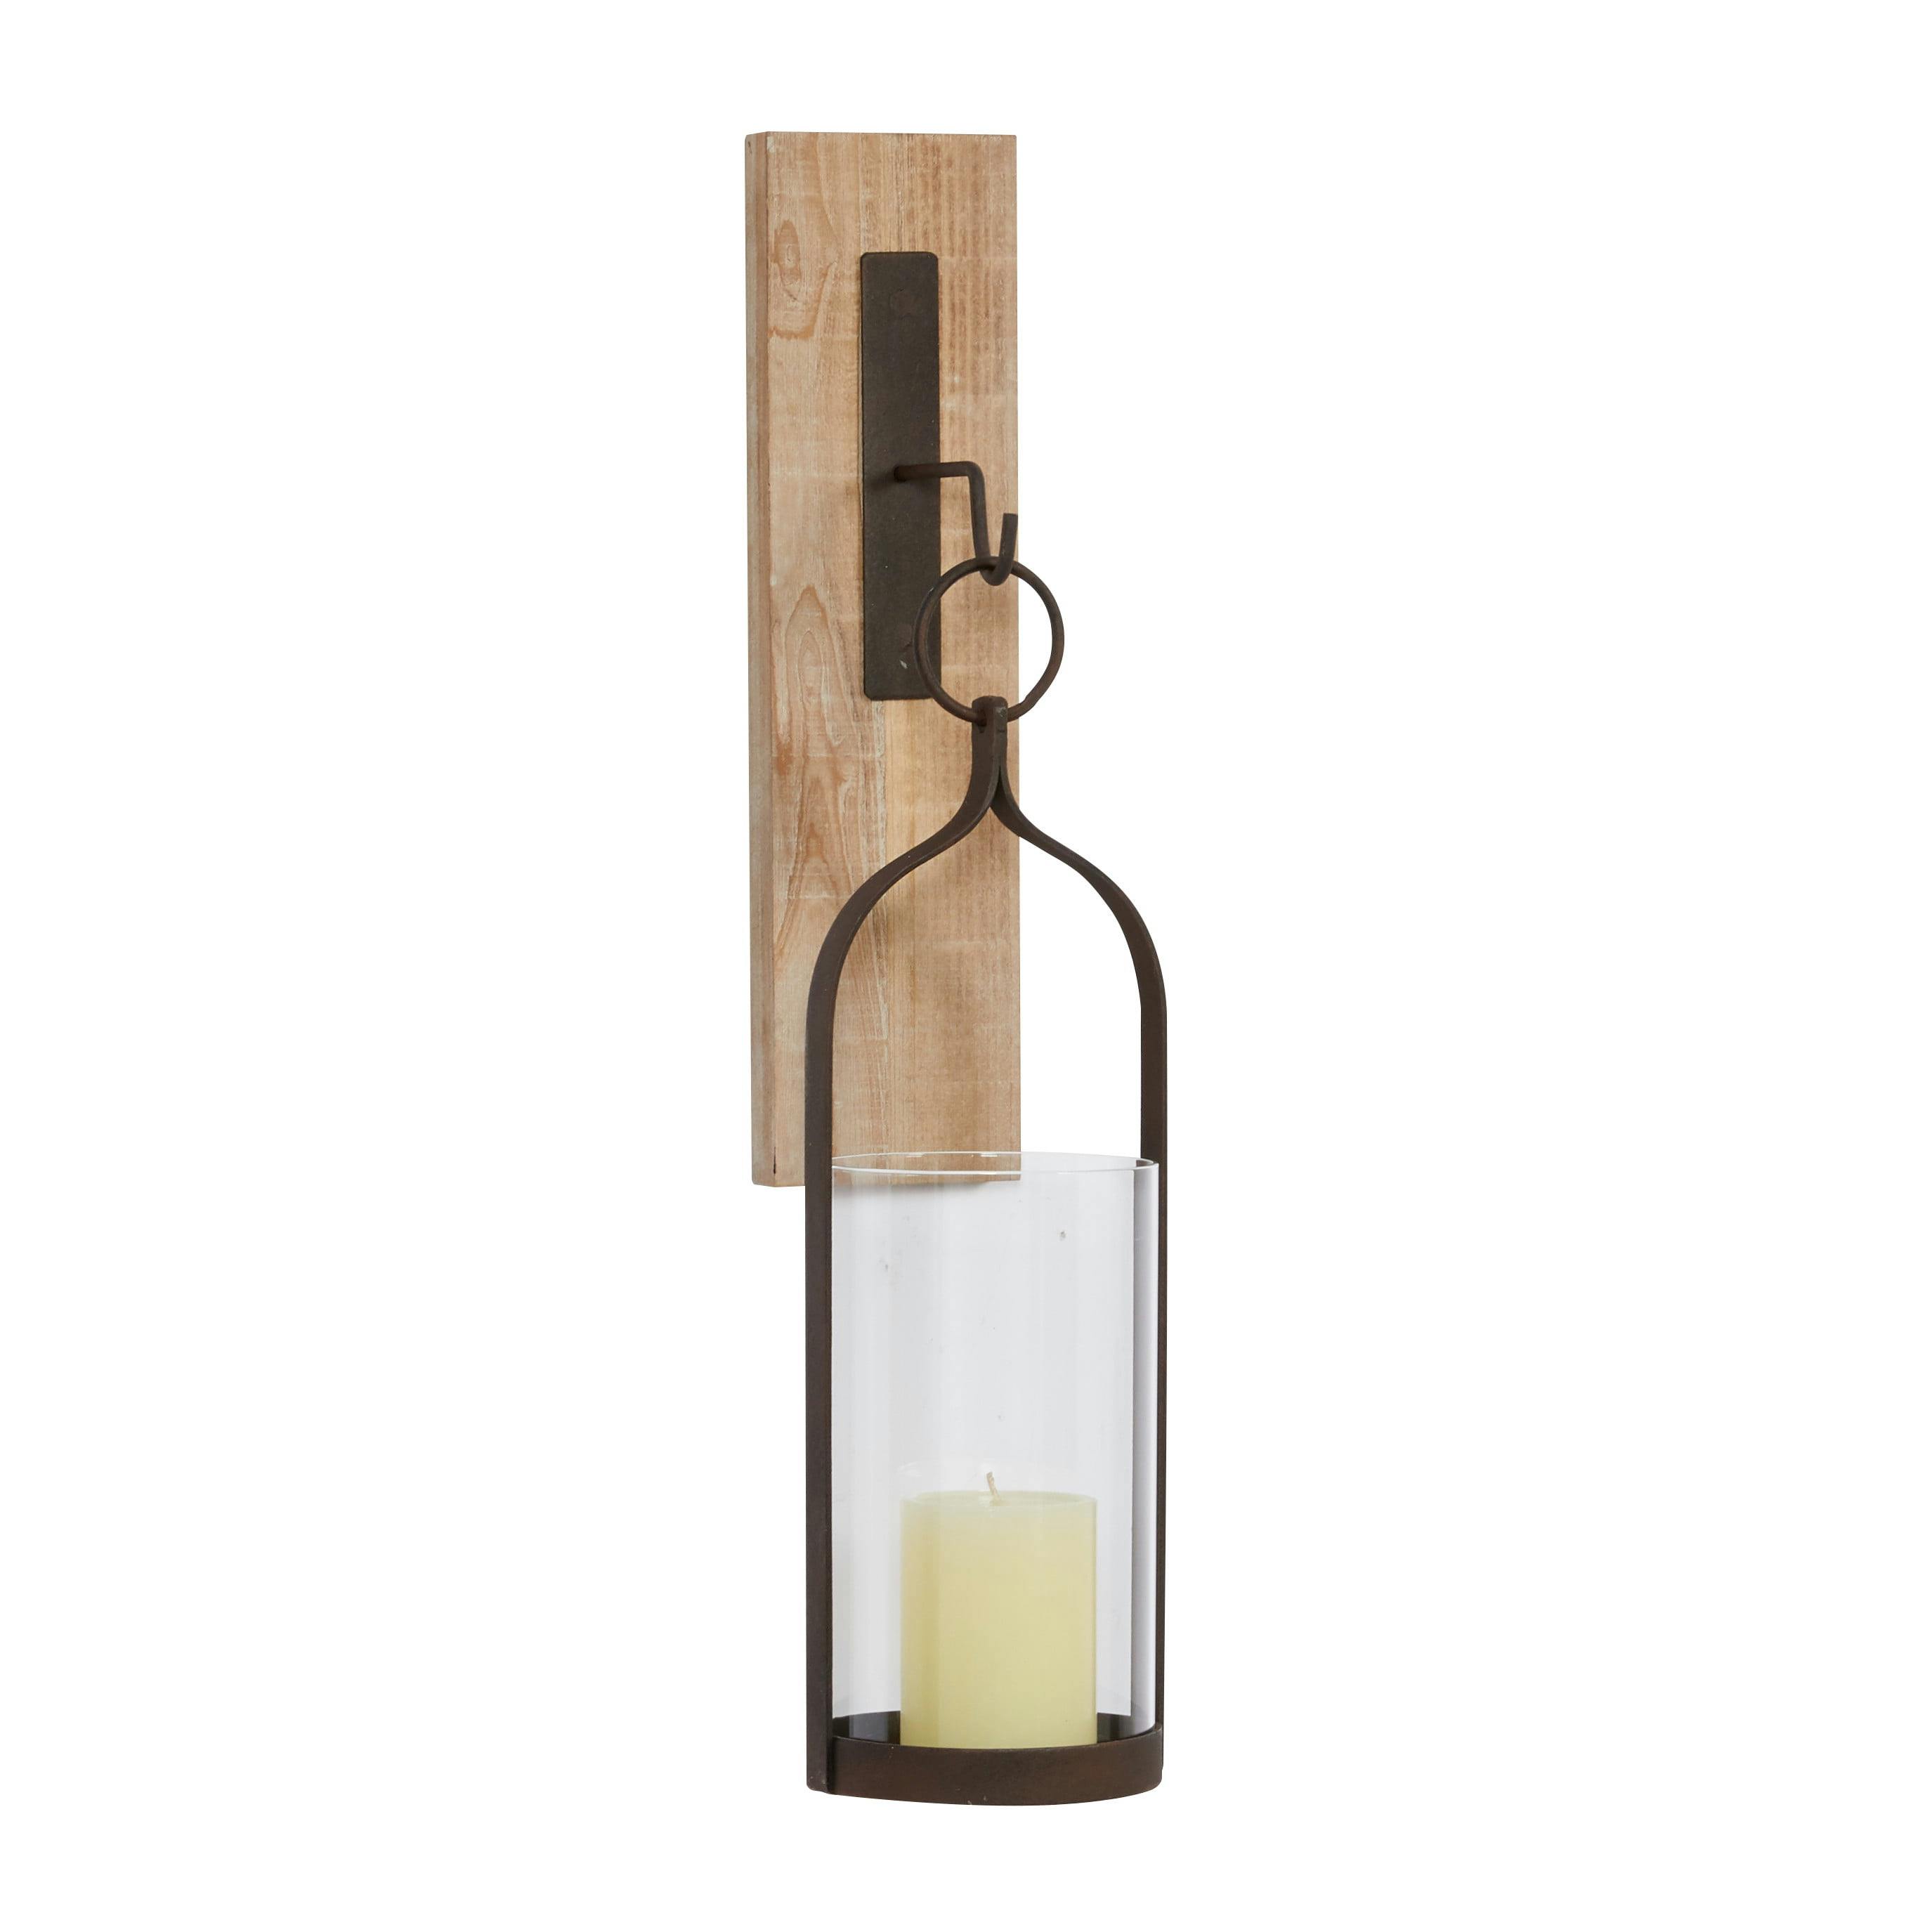 Elegant Black Wood and Glass Hanging Candle Lantern Sconce 22.75"